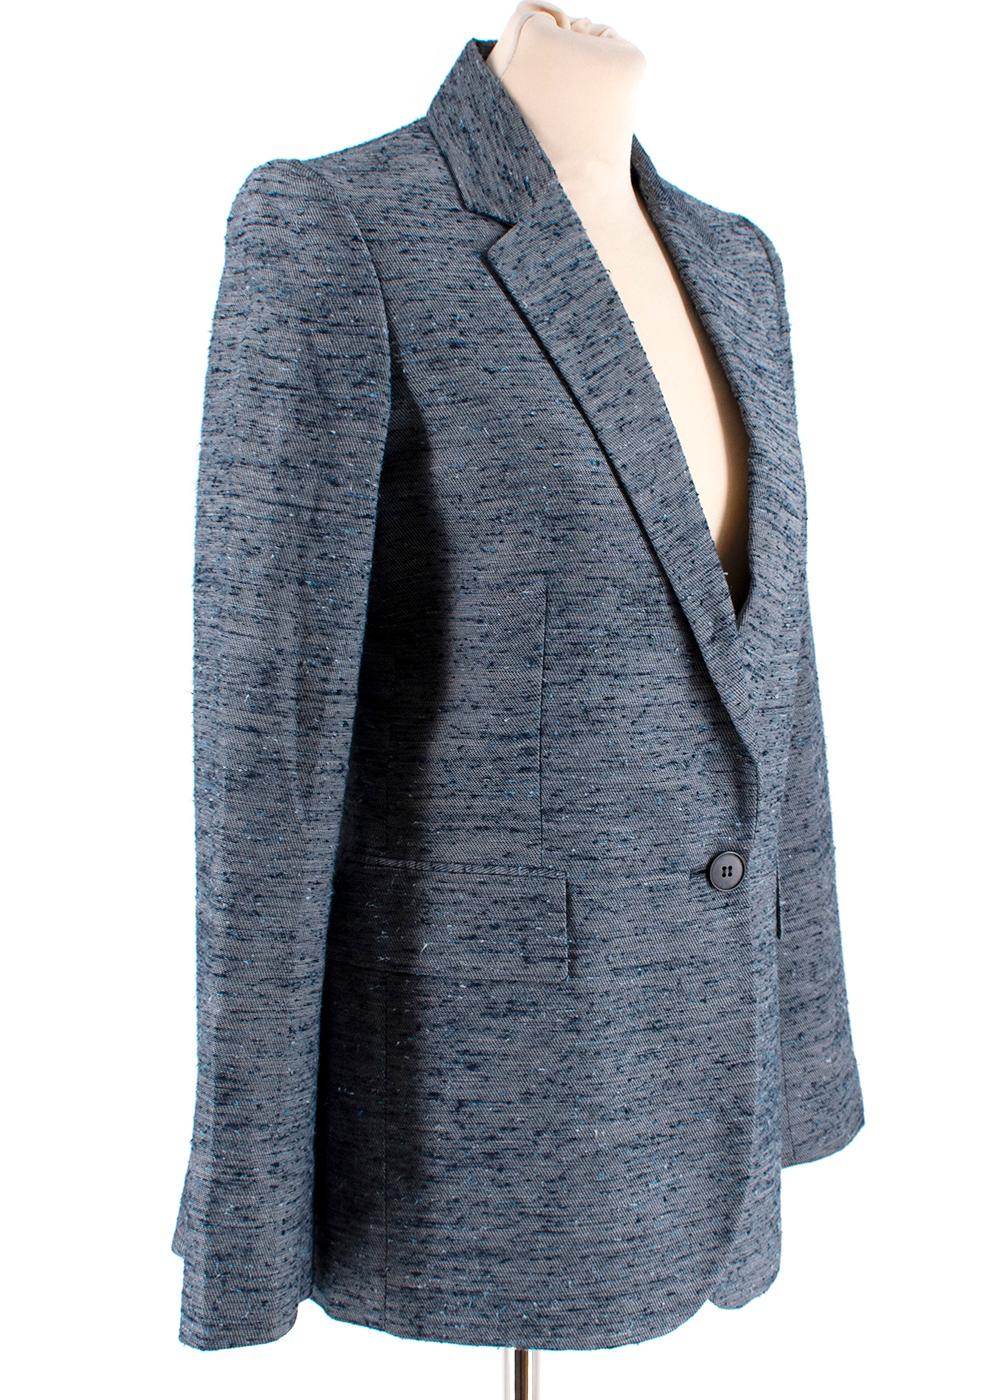 Gray Stella McCartney Navy Textured Blazer - Size US 0-2 For Sale